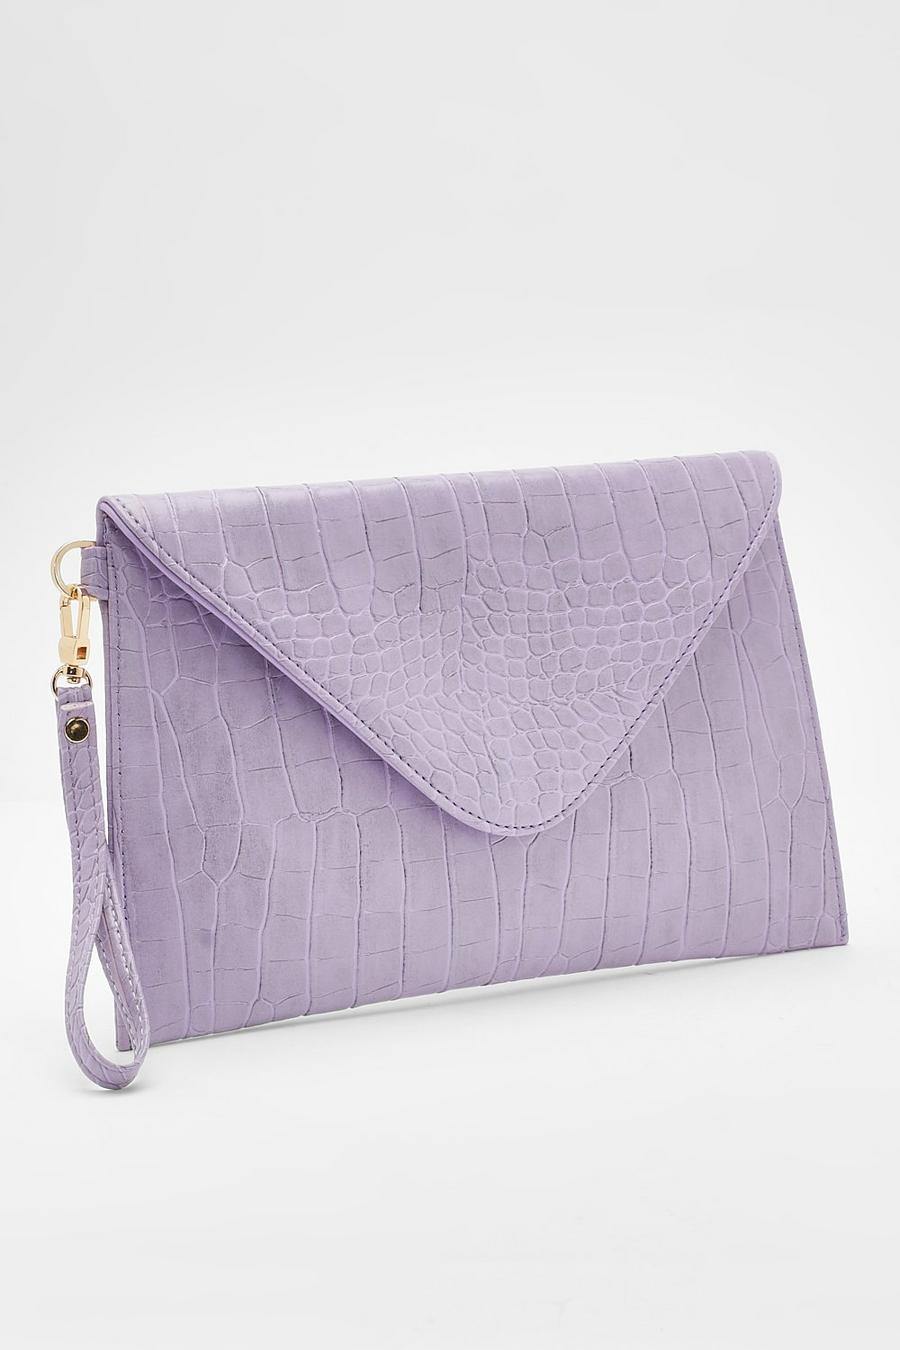 Pochette style enveloppe, Lilac purple